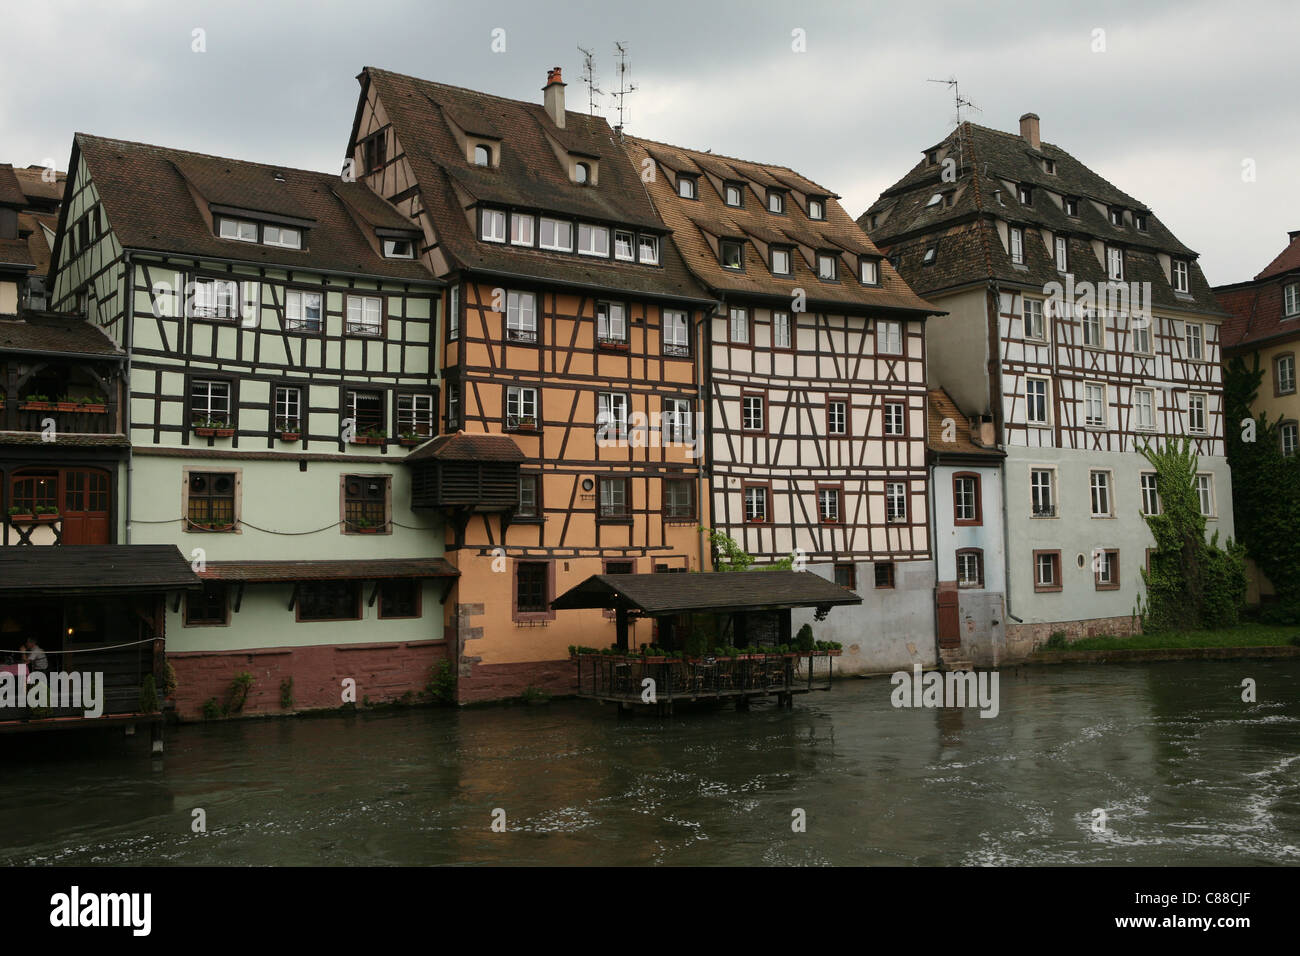 Timber-frame houses in La Petite France quarter in the historic centre of Strasbourg, France. Stock Photo